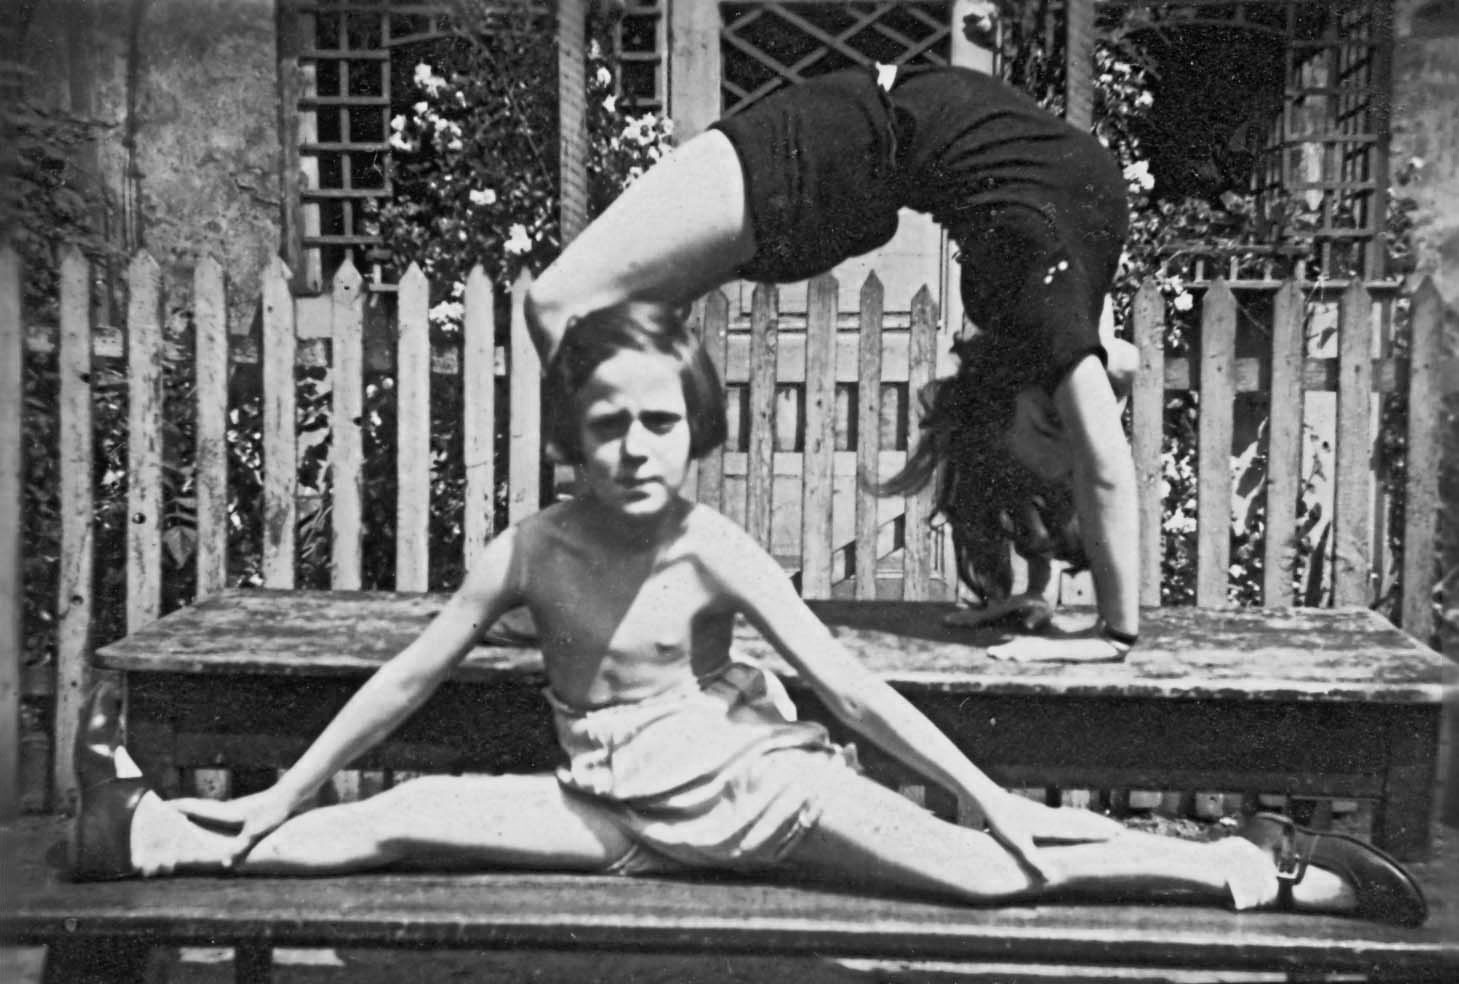 Gymnastics lesson at the Jewish sports club in Kalisz, Poland, 1918